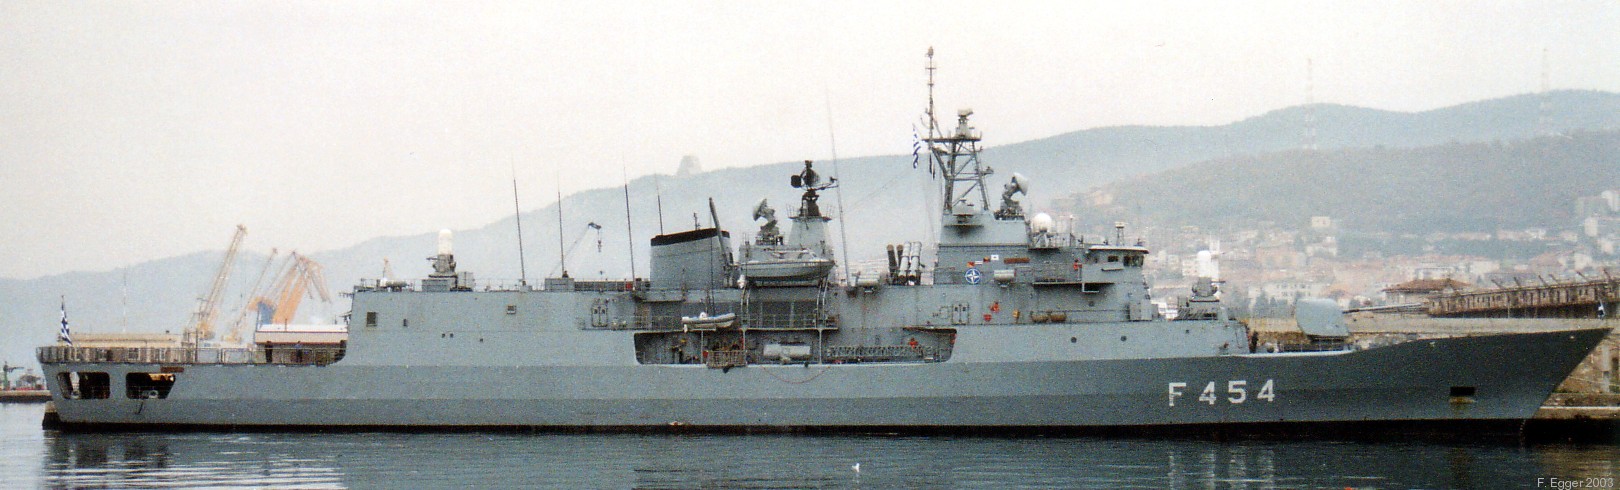 f 454 hs psara hydra class frigate meko-200hn hellenic navy greece nato standing naval force mediterranean stanavformed trieste italy 2003 06